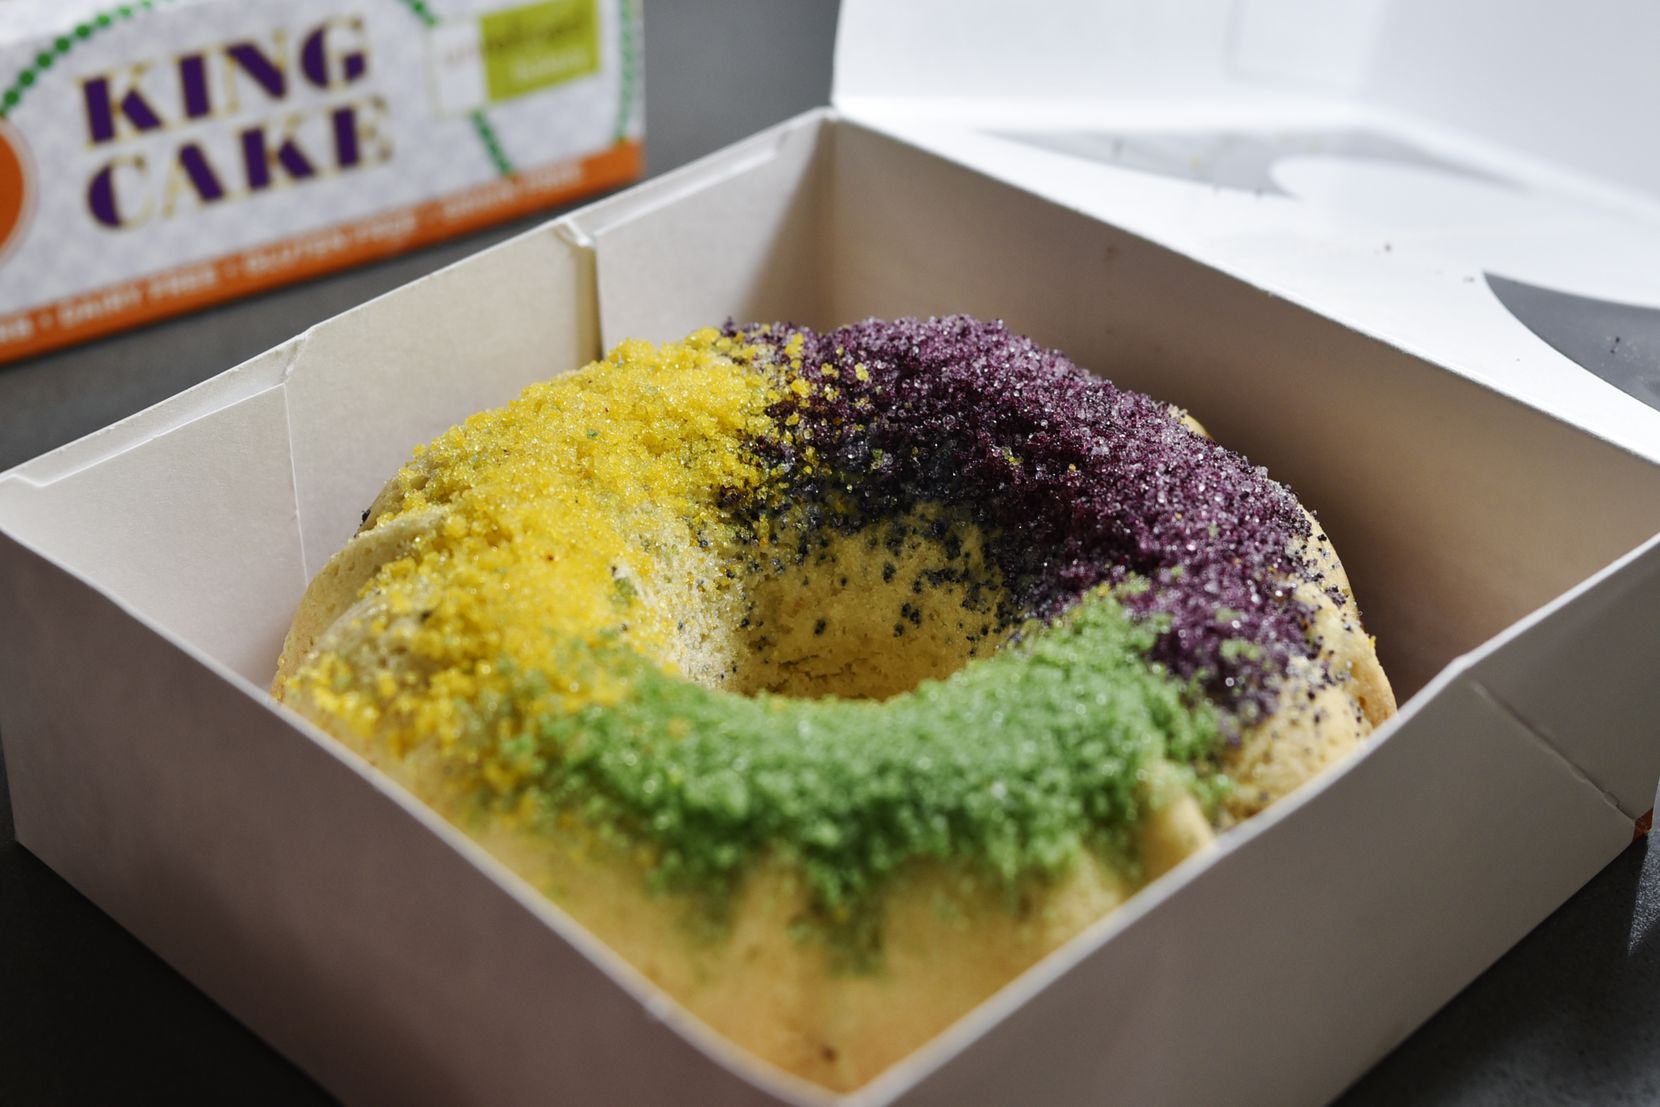 Mini Keto King Cake from Unrefined Bakery in Dallas